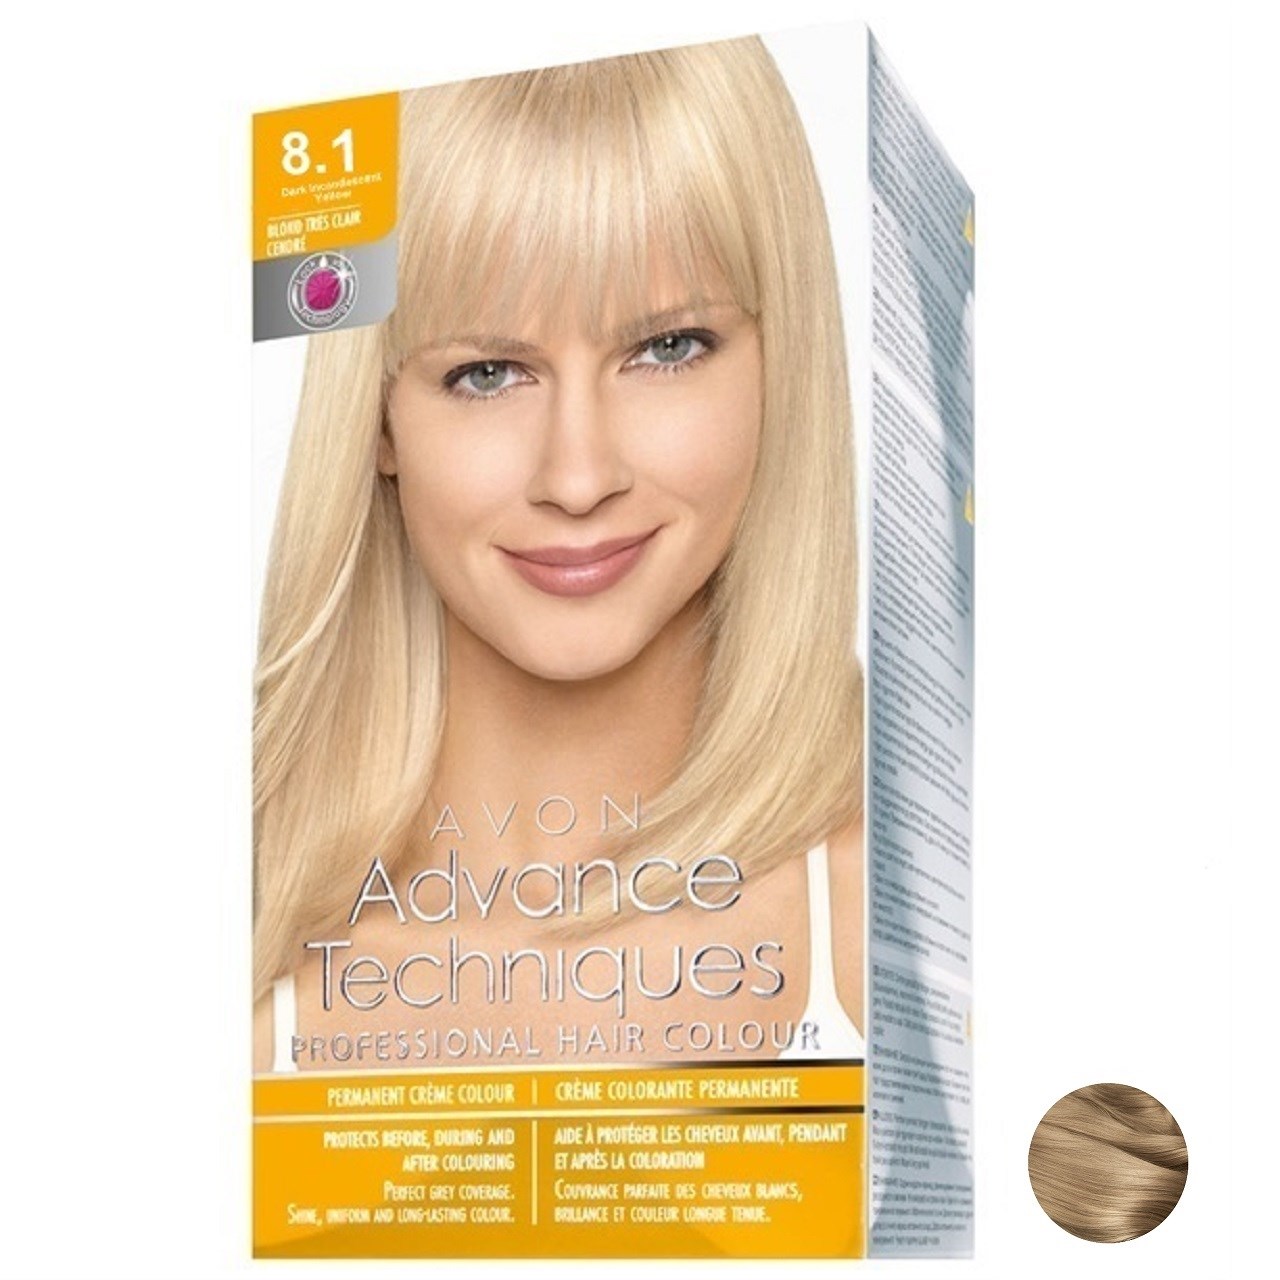 کیت رنگ مو آون مدل Advance Techniques Professional Hair Color کد8.1 رنگ Medium Ash Blonde